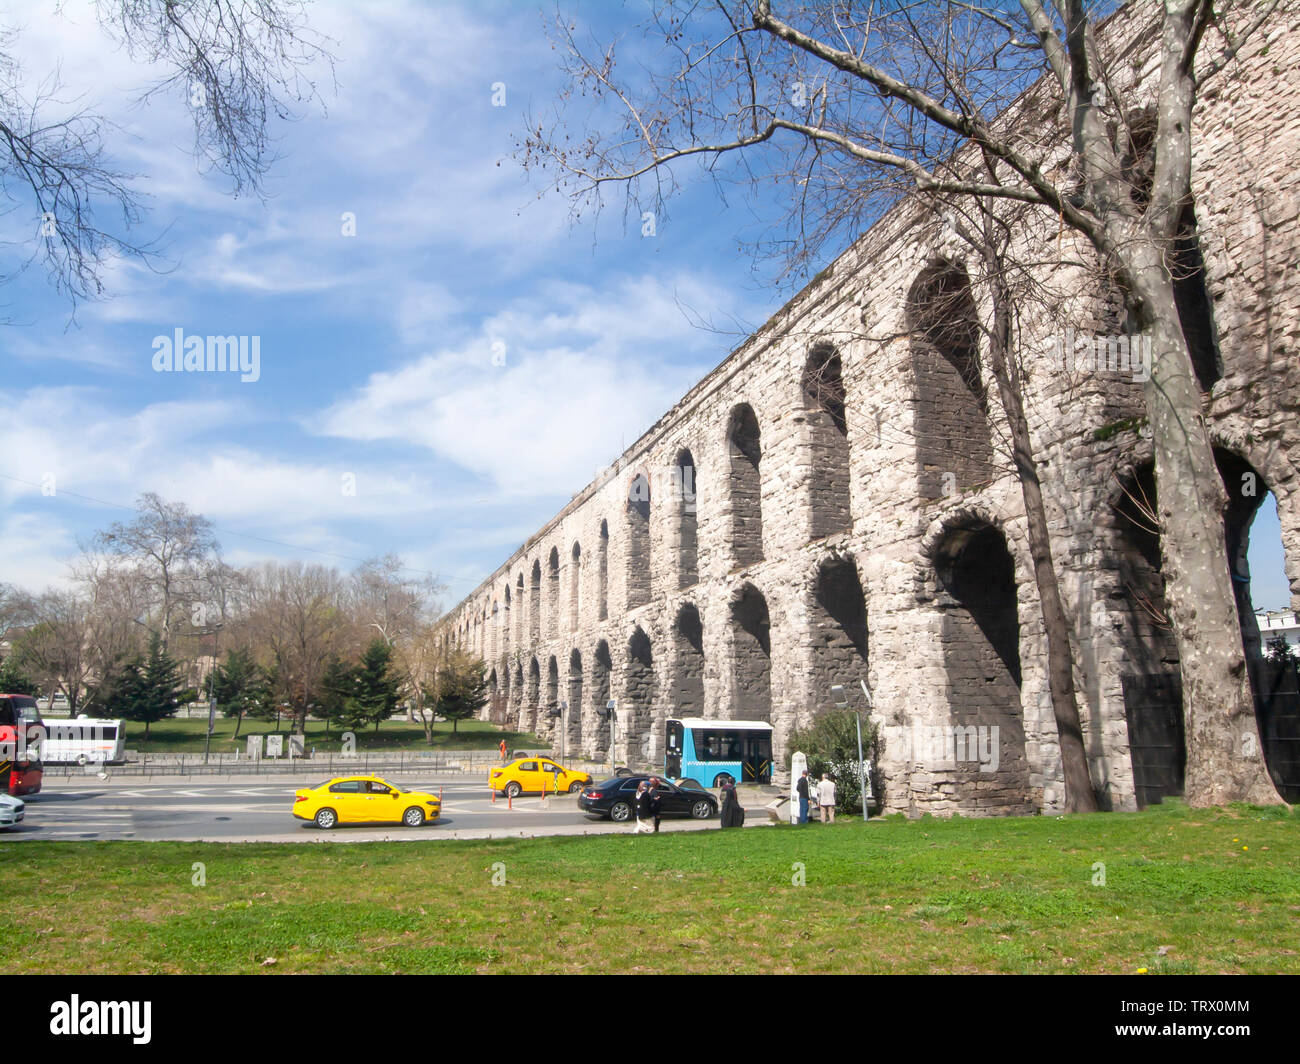 Valens Aquädukt (bozdogan Kemeri), Türkei, Istanbul. Aquädukt von Valens war ein wichtiger Teil des Konstantinopel Wasserversorgung Stockfoto